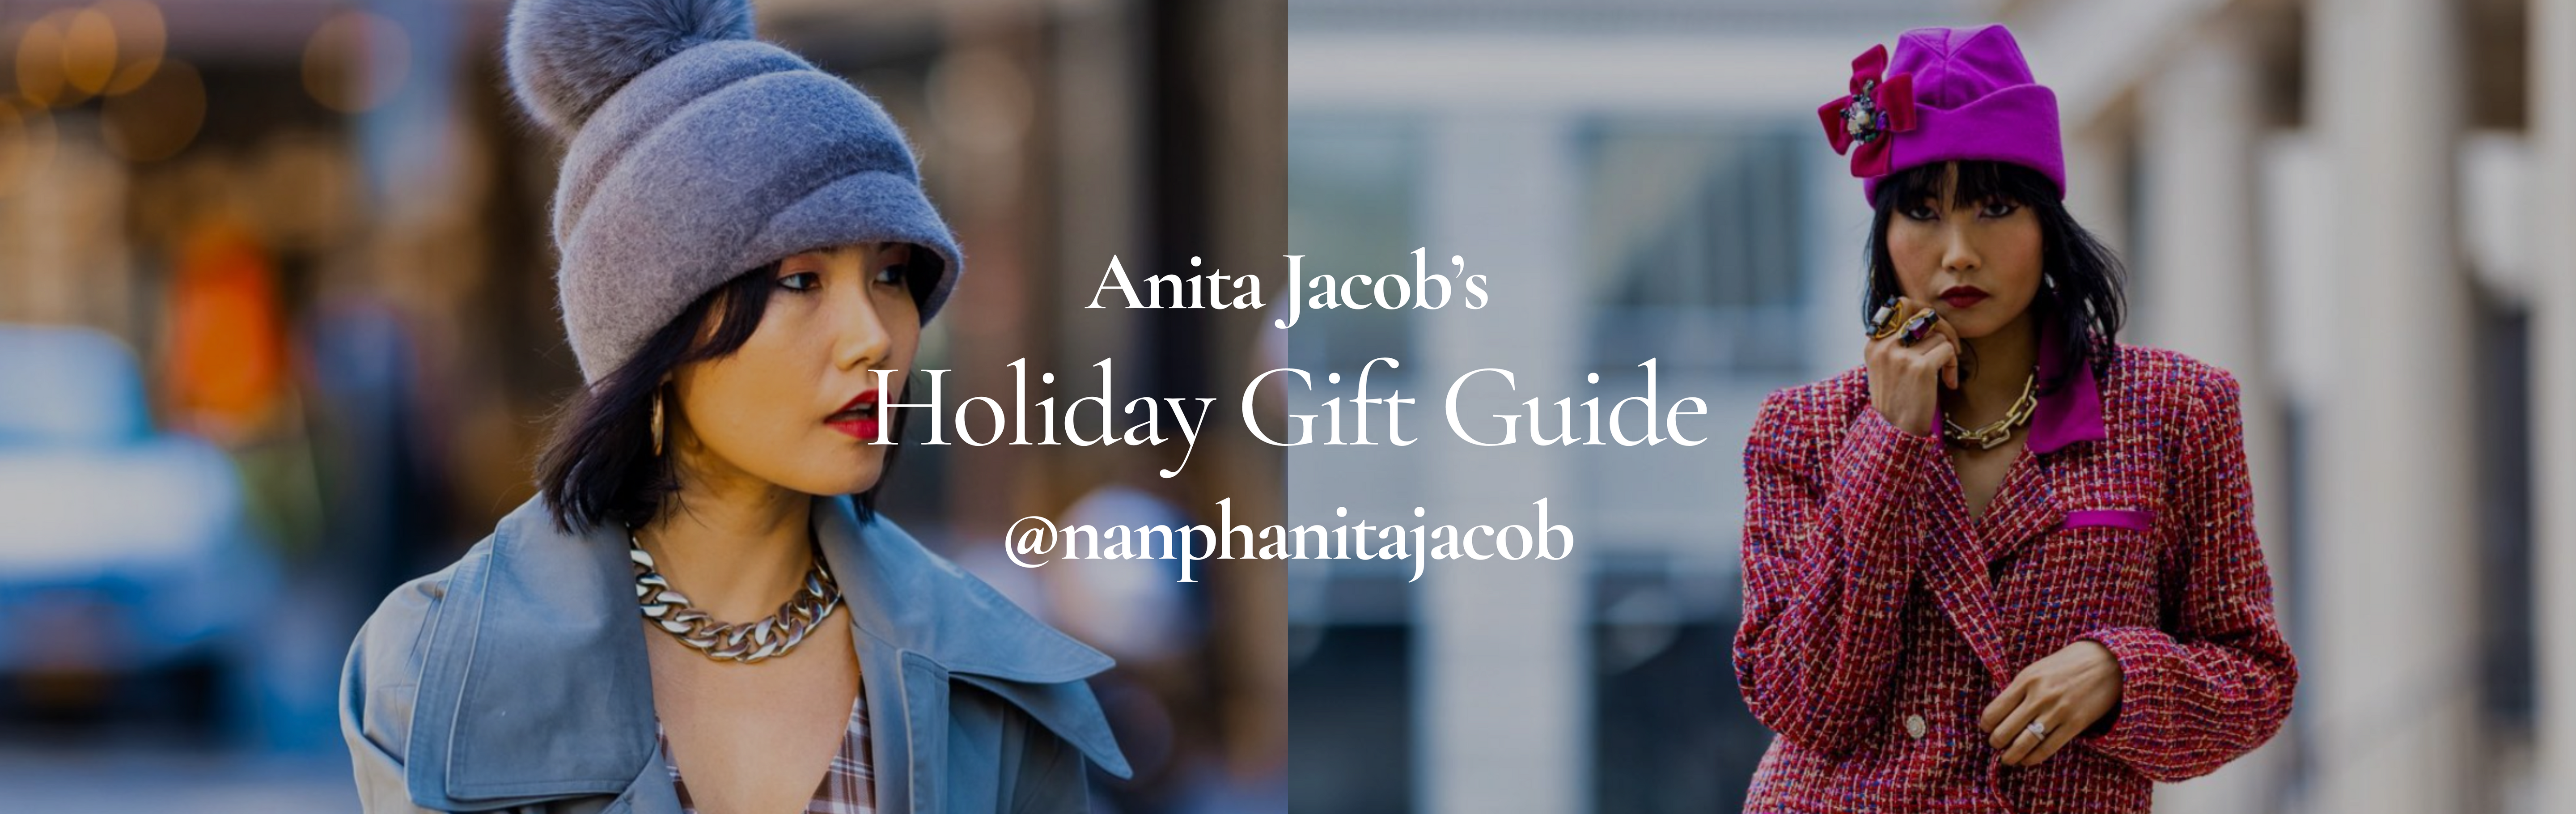 Anita Jacob Gift Guide